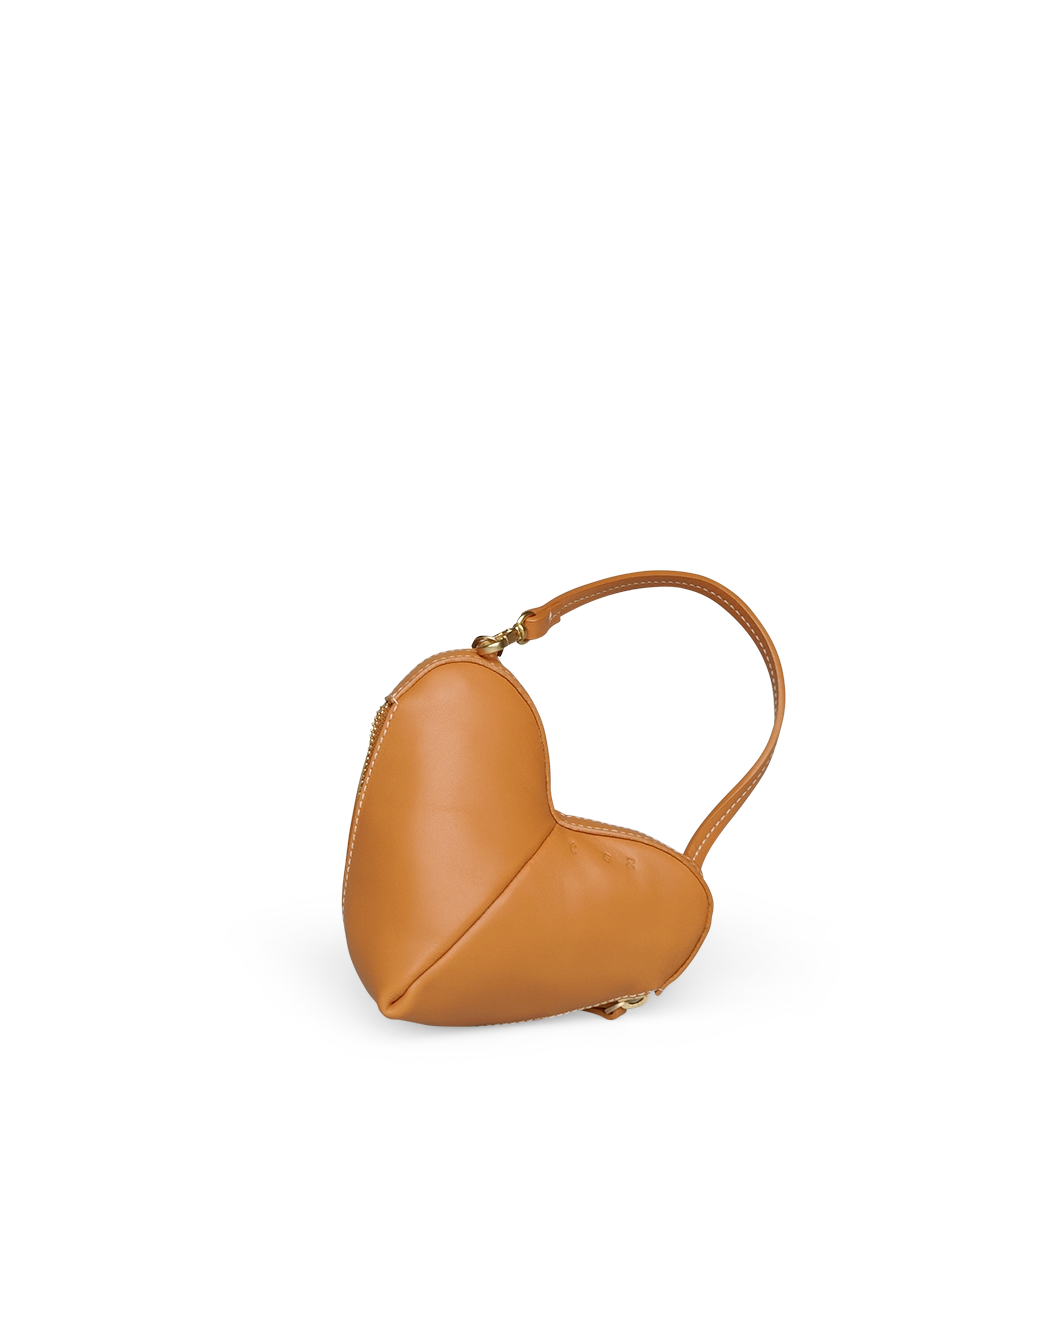 the corazón cognac pouch